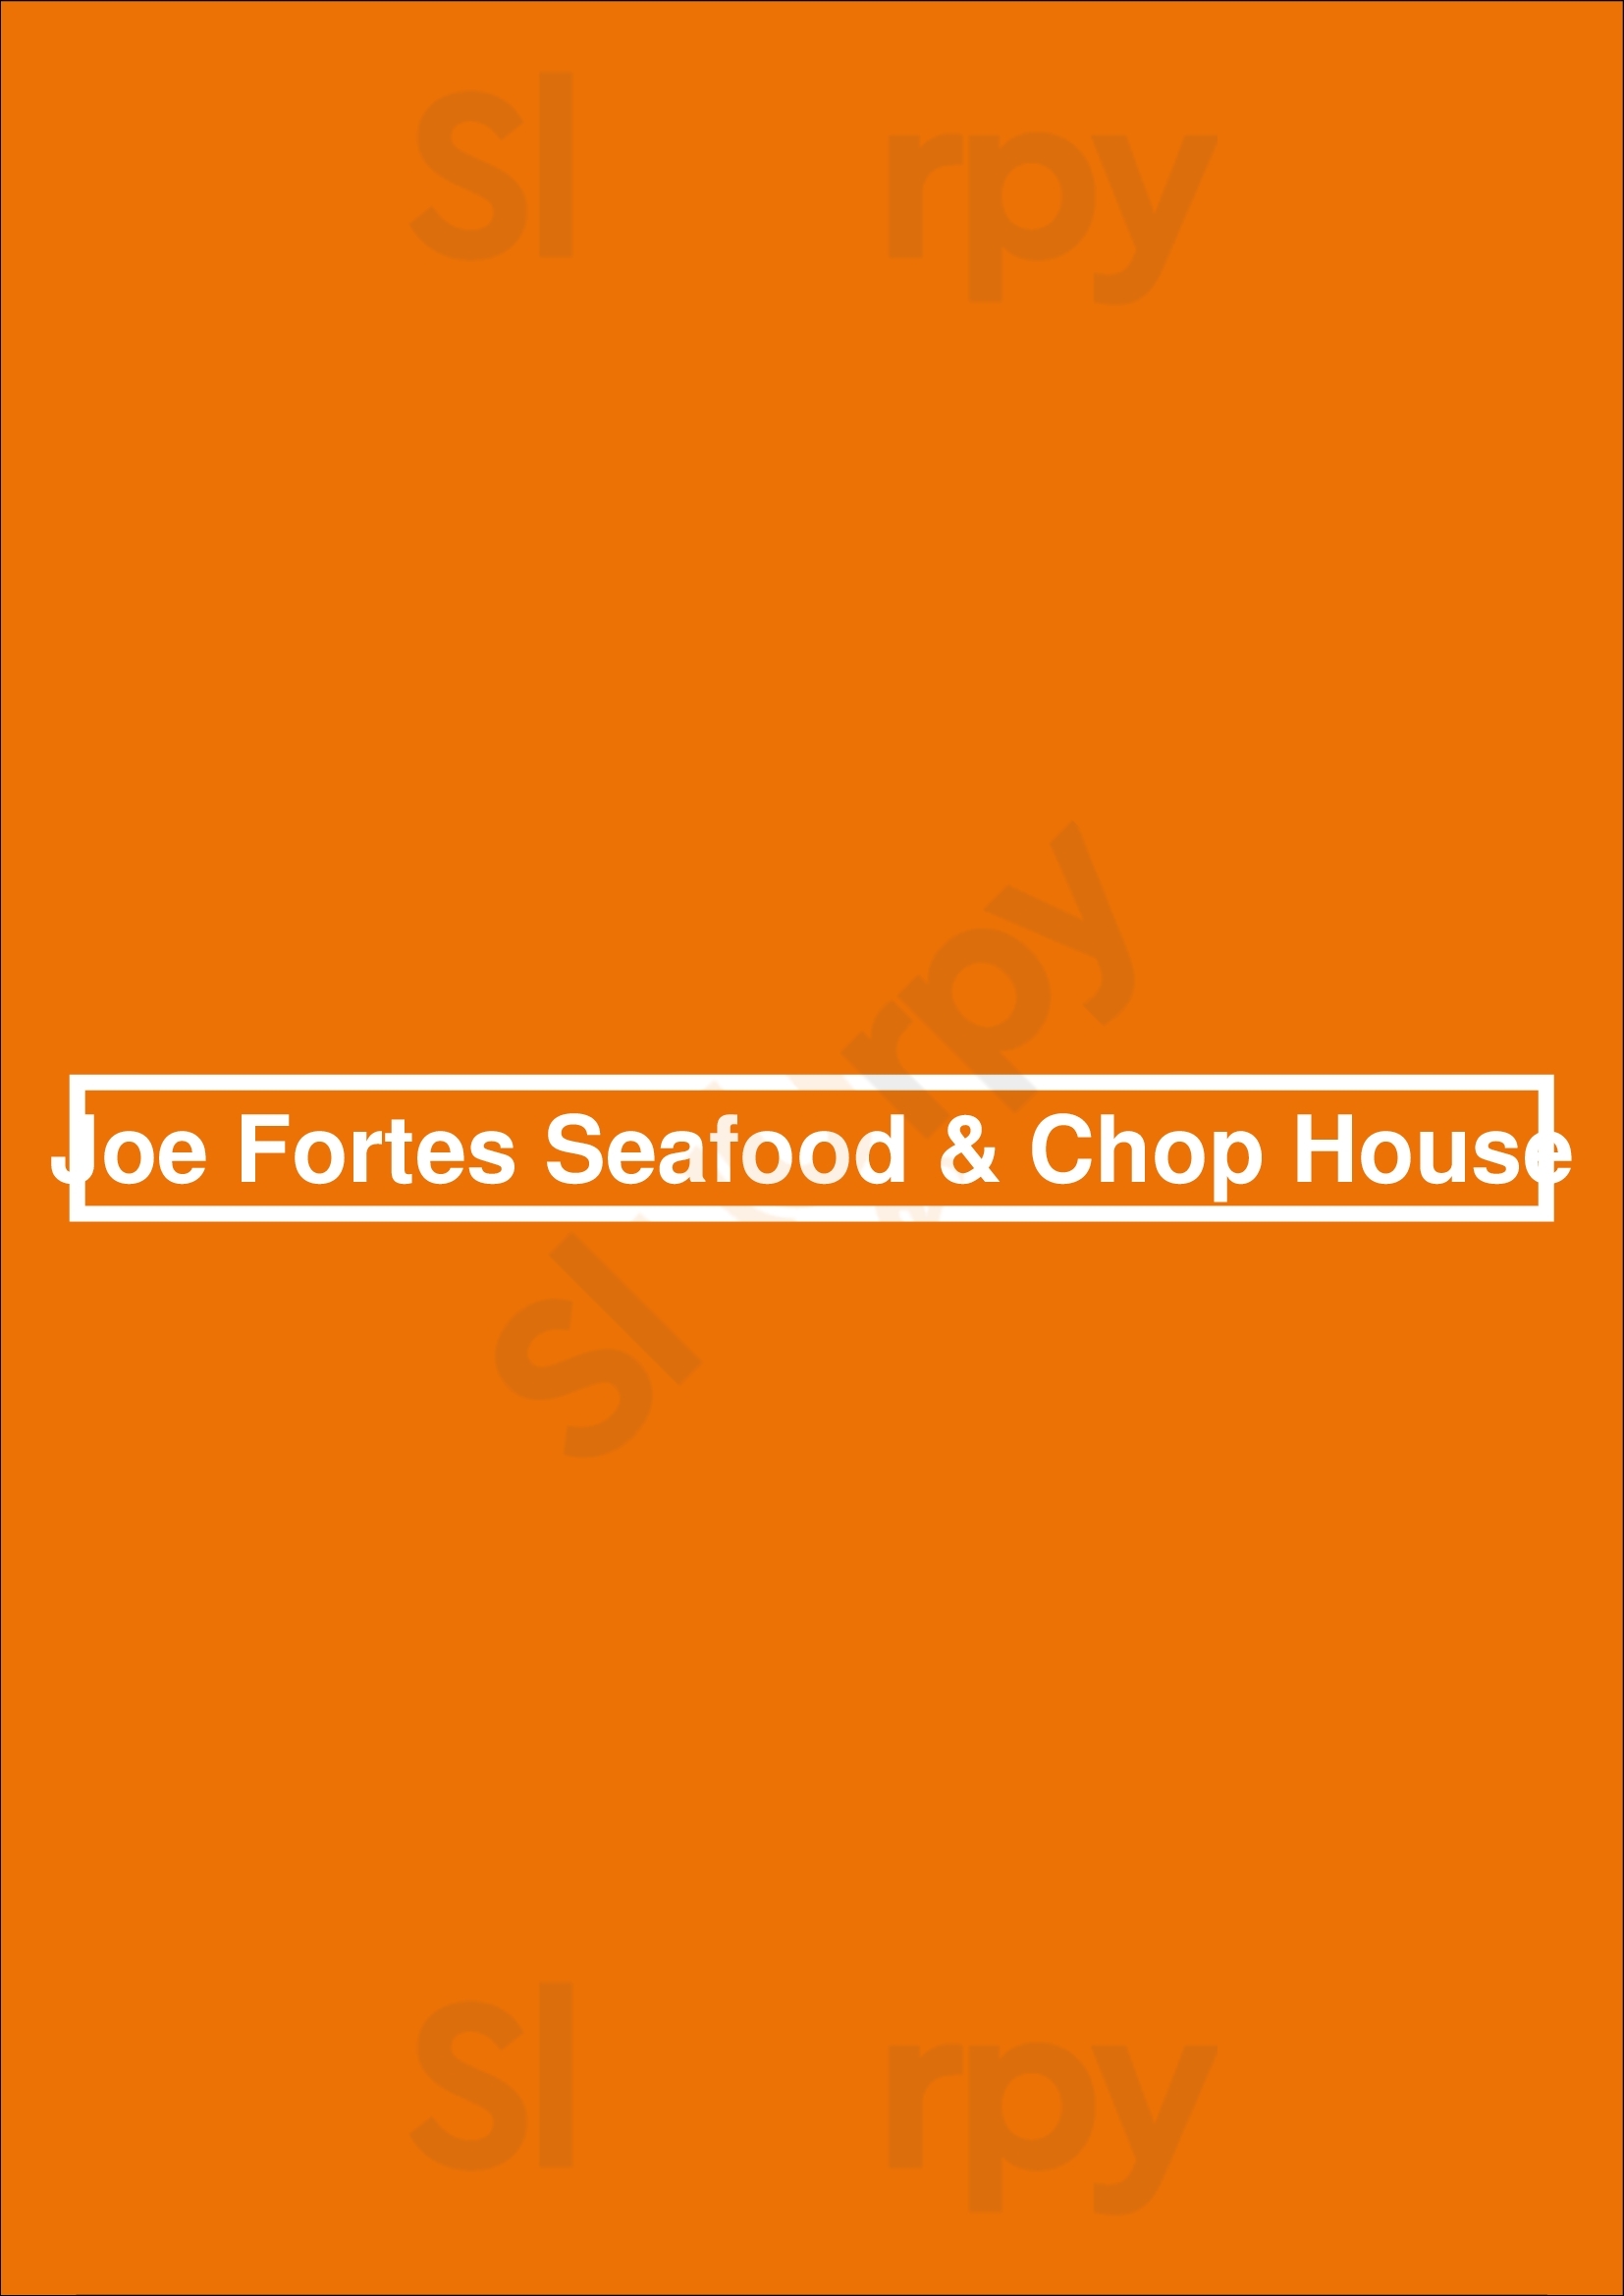 Joe Fortes Seafood & Chop House Vancouver Menu - 1